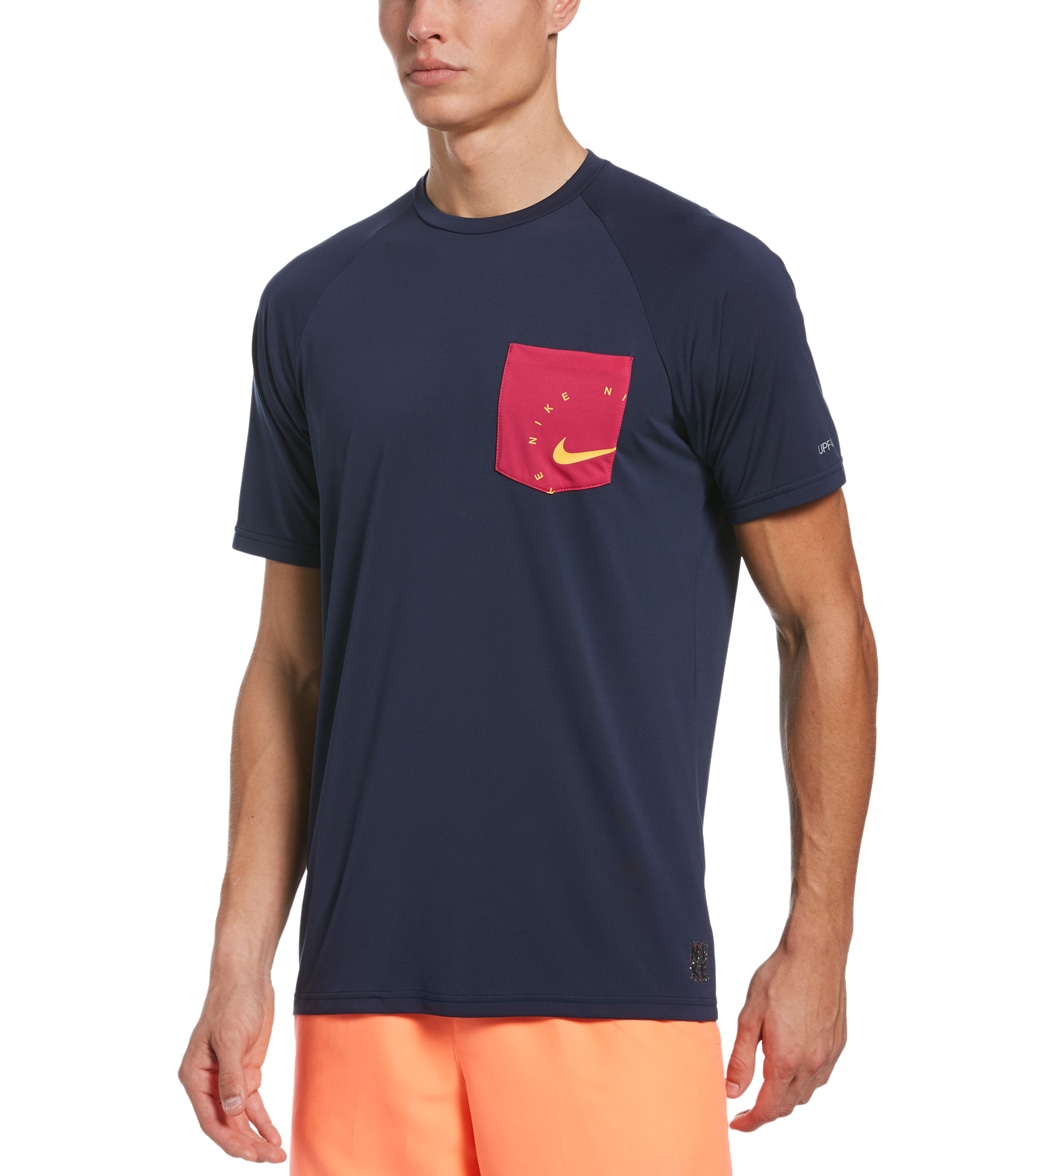 Nike Men's Logo Short Sleeve Hydro Rashguard Shirt - Midnight Navy Medium - Swimoutlet.com